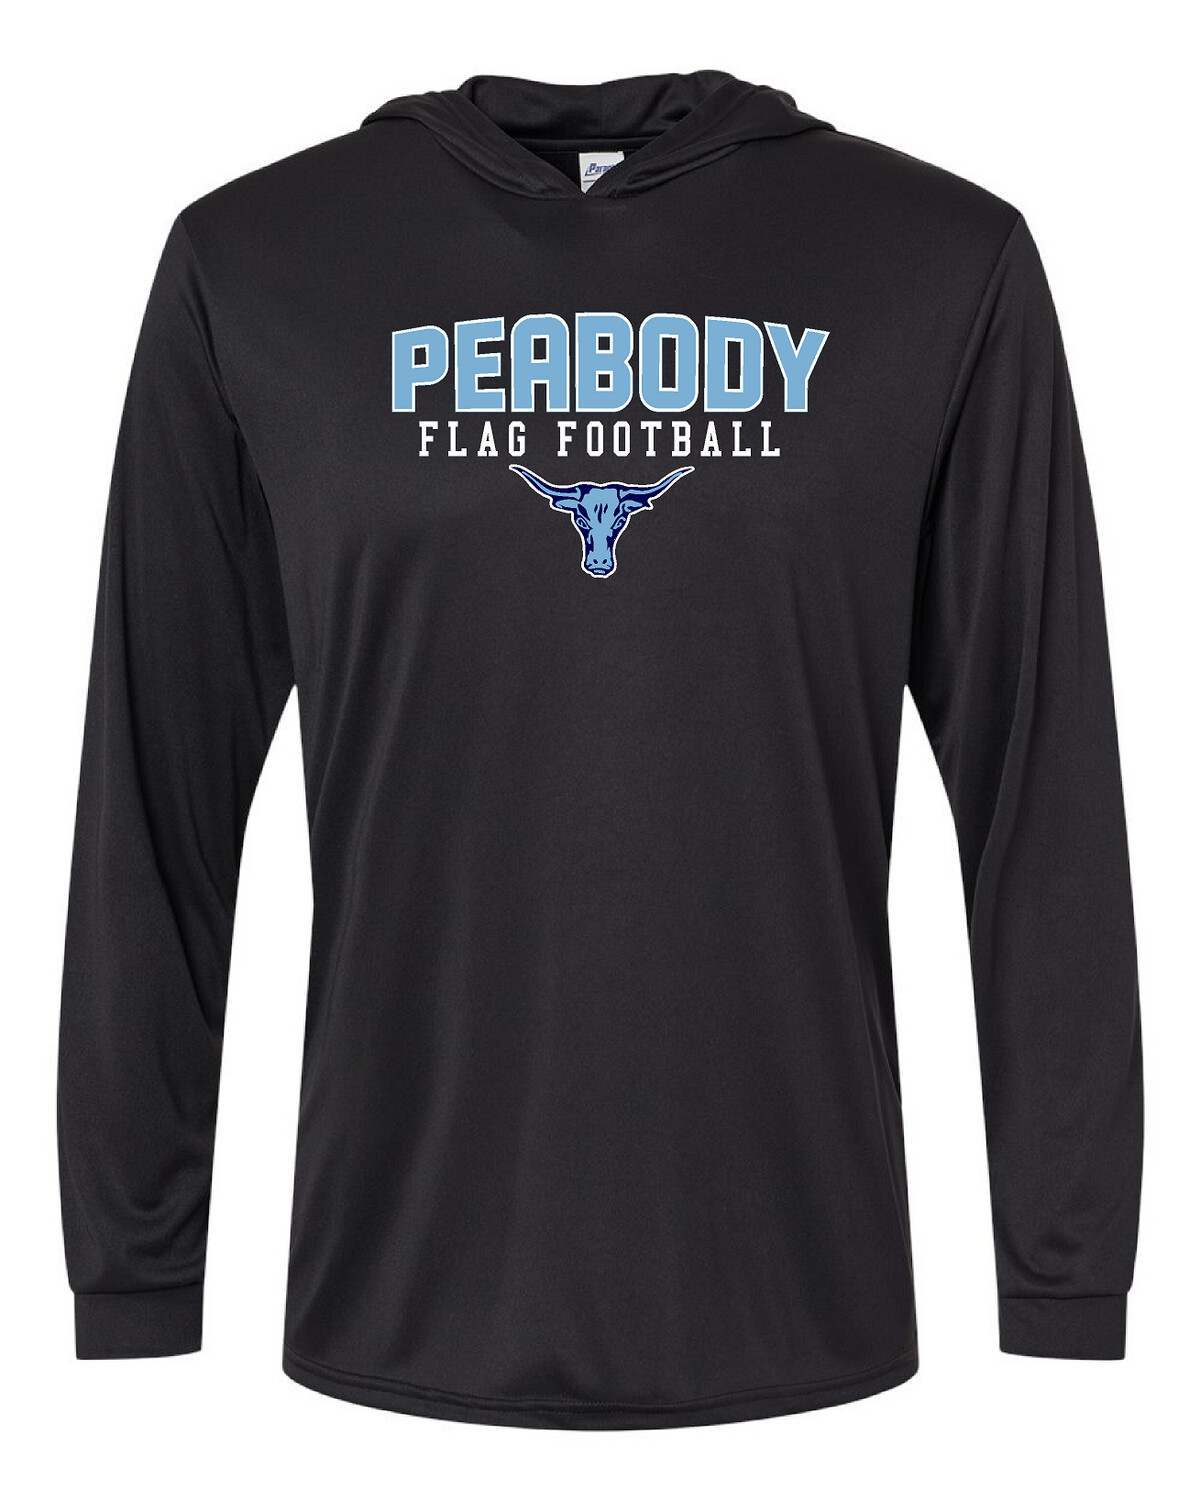 Peabody High Flag Football Dri-Fit Hooded Long Sleeve Shirt W/ UPF50+ Protection